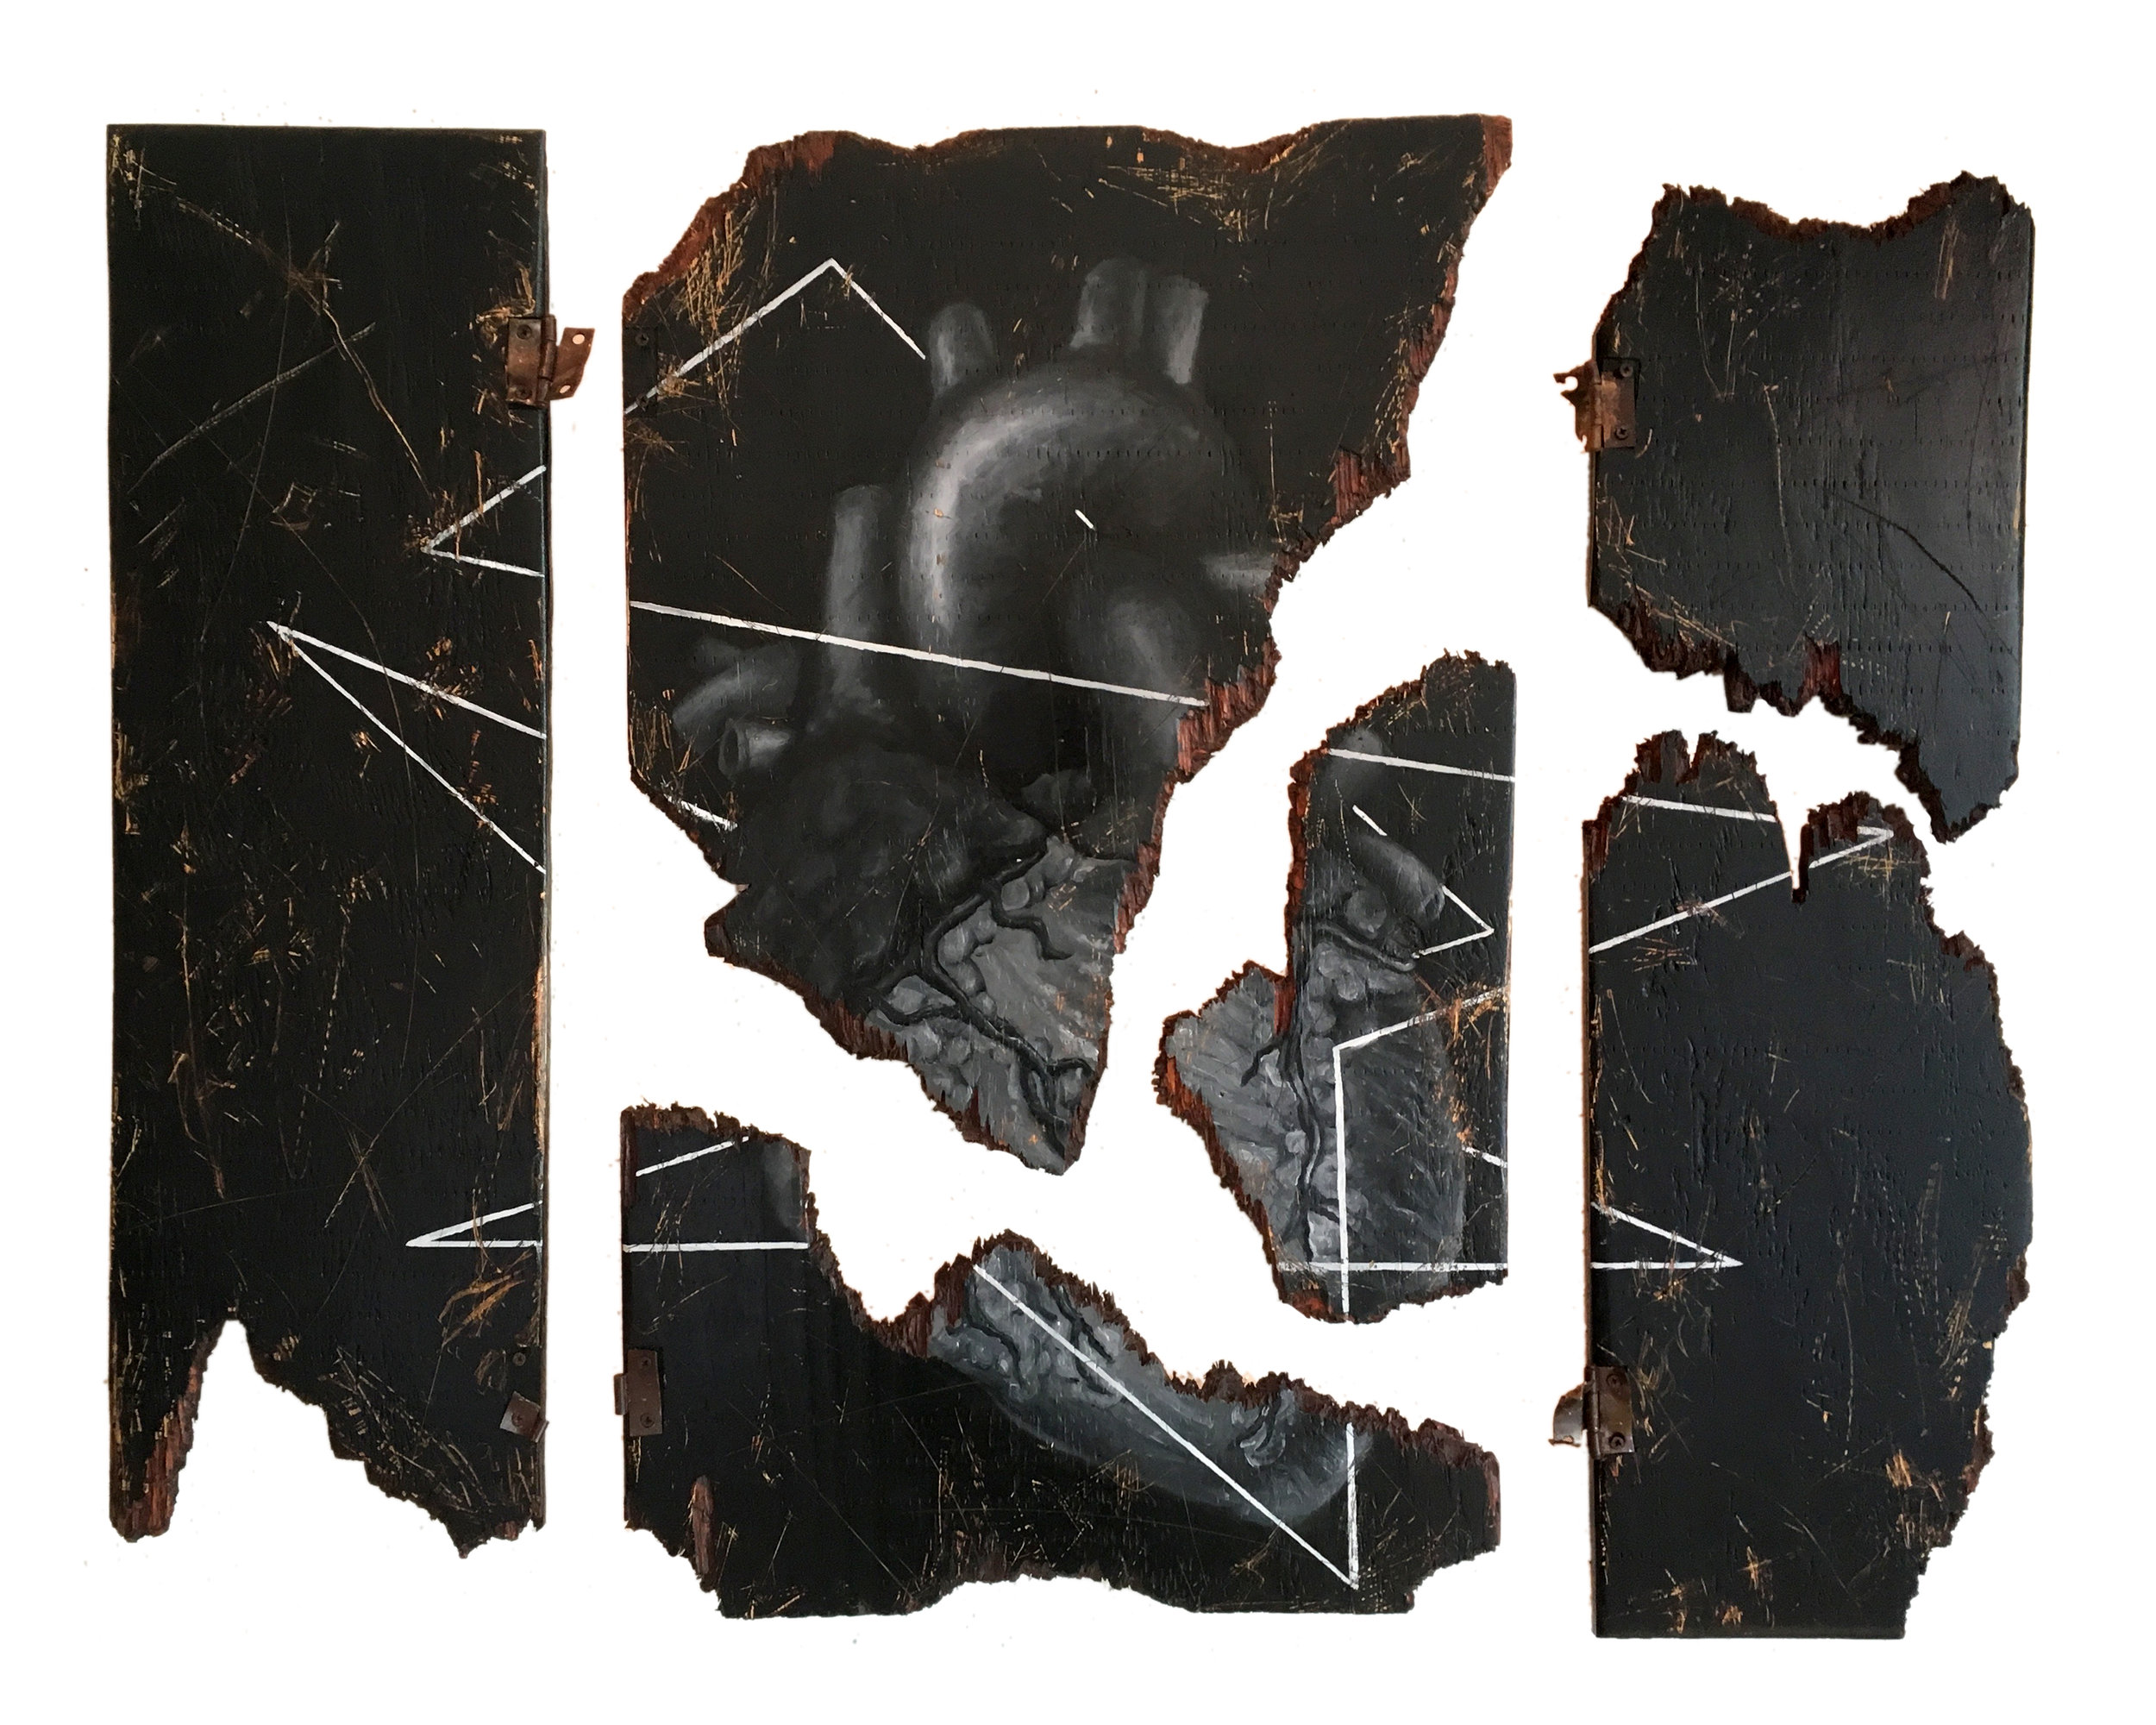  Dark Matter  34 x 26  Oil paint in wood, rusted metal hinges  2017    